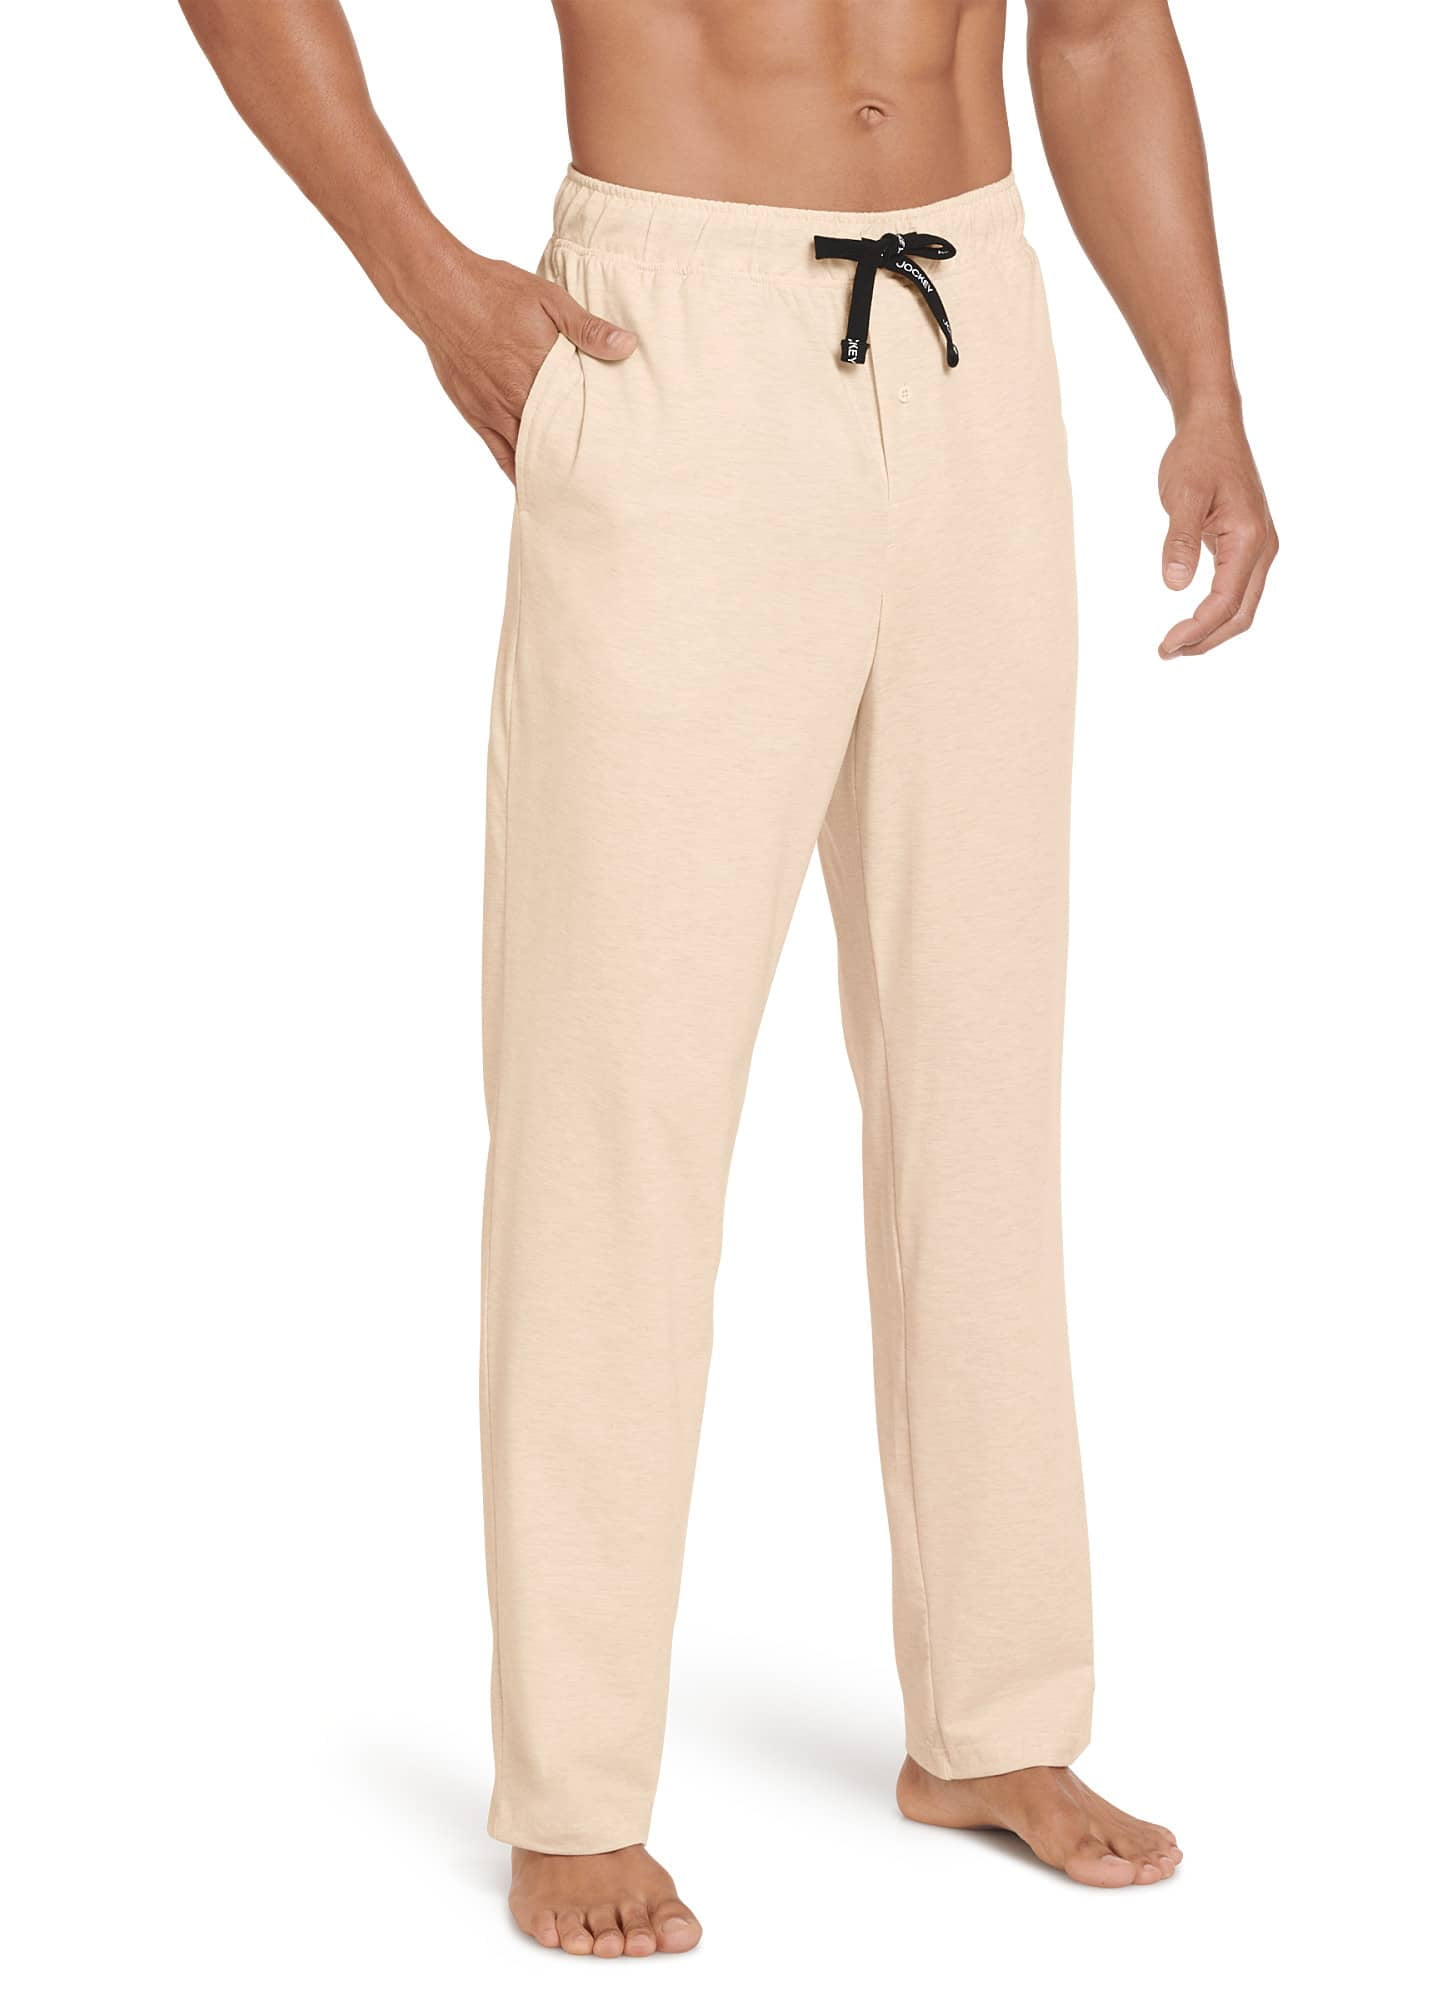 Buy JEFFY Premium Cotton Lower Pajama Lounge Pants for Men Colour Skin  Size-M (31-32) at Amazon.in